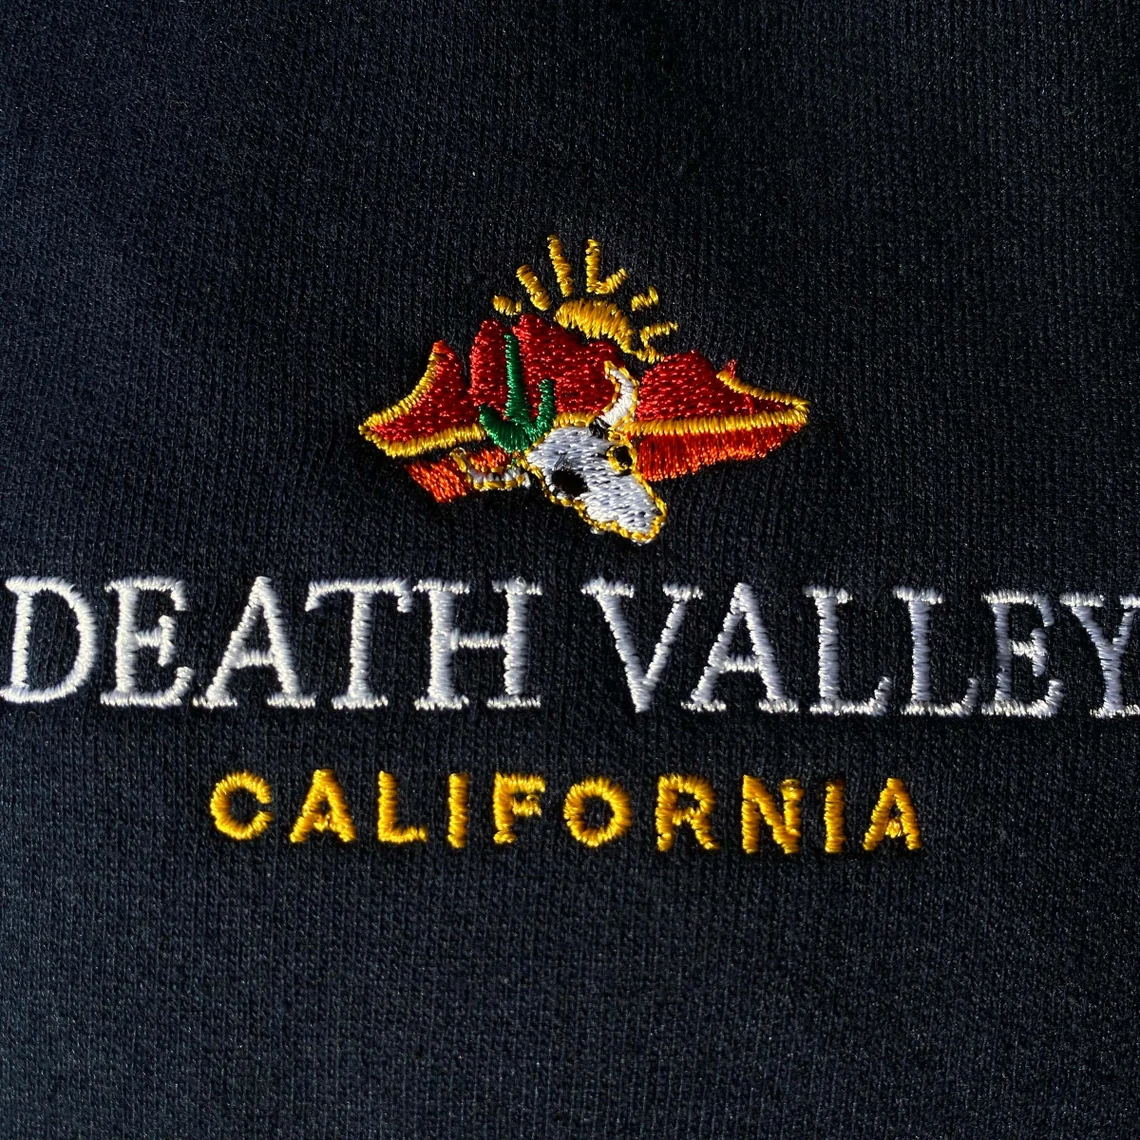 Death Valley California Embroidered Crewneck Cotton Thick Sweatshirt